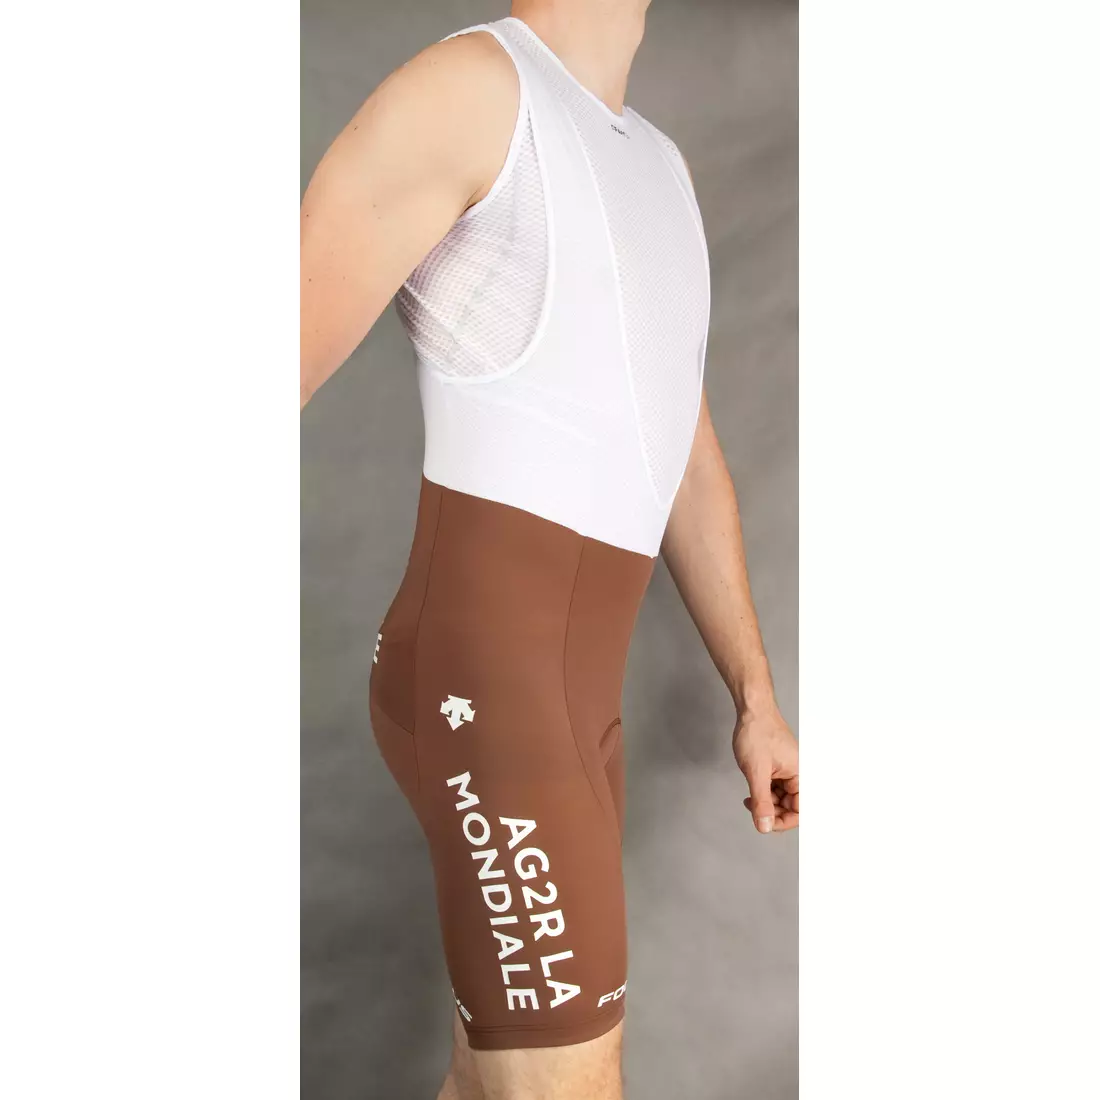 AG2R 2015 cycling shorts